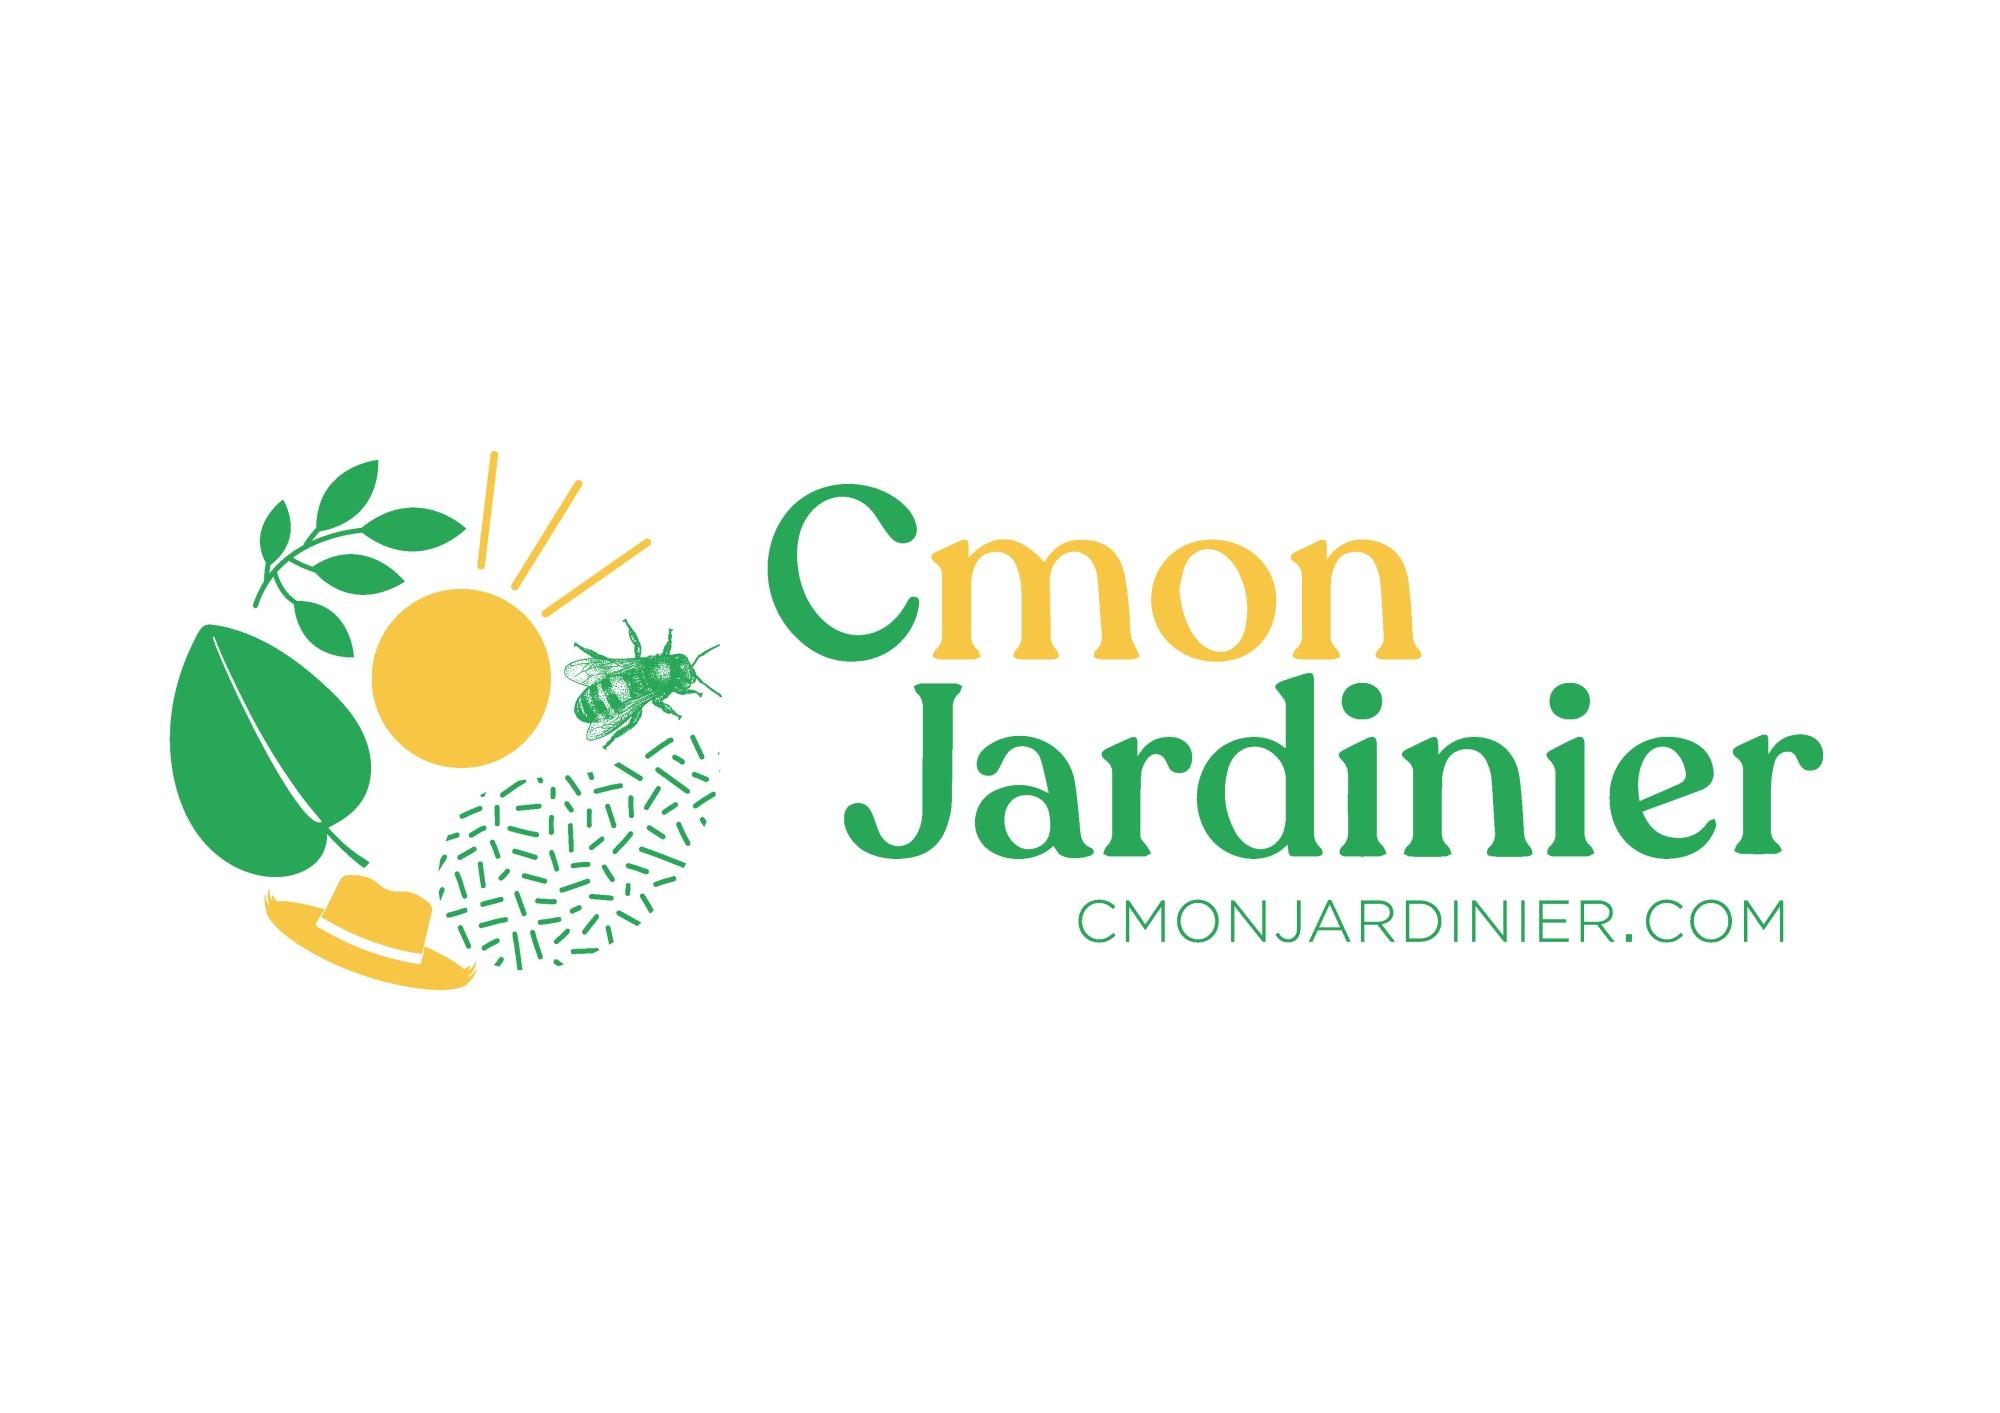 Jordan - Jardinier  - Cmonjardinier Nice